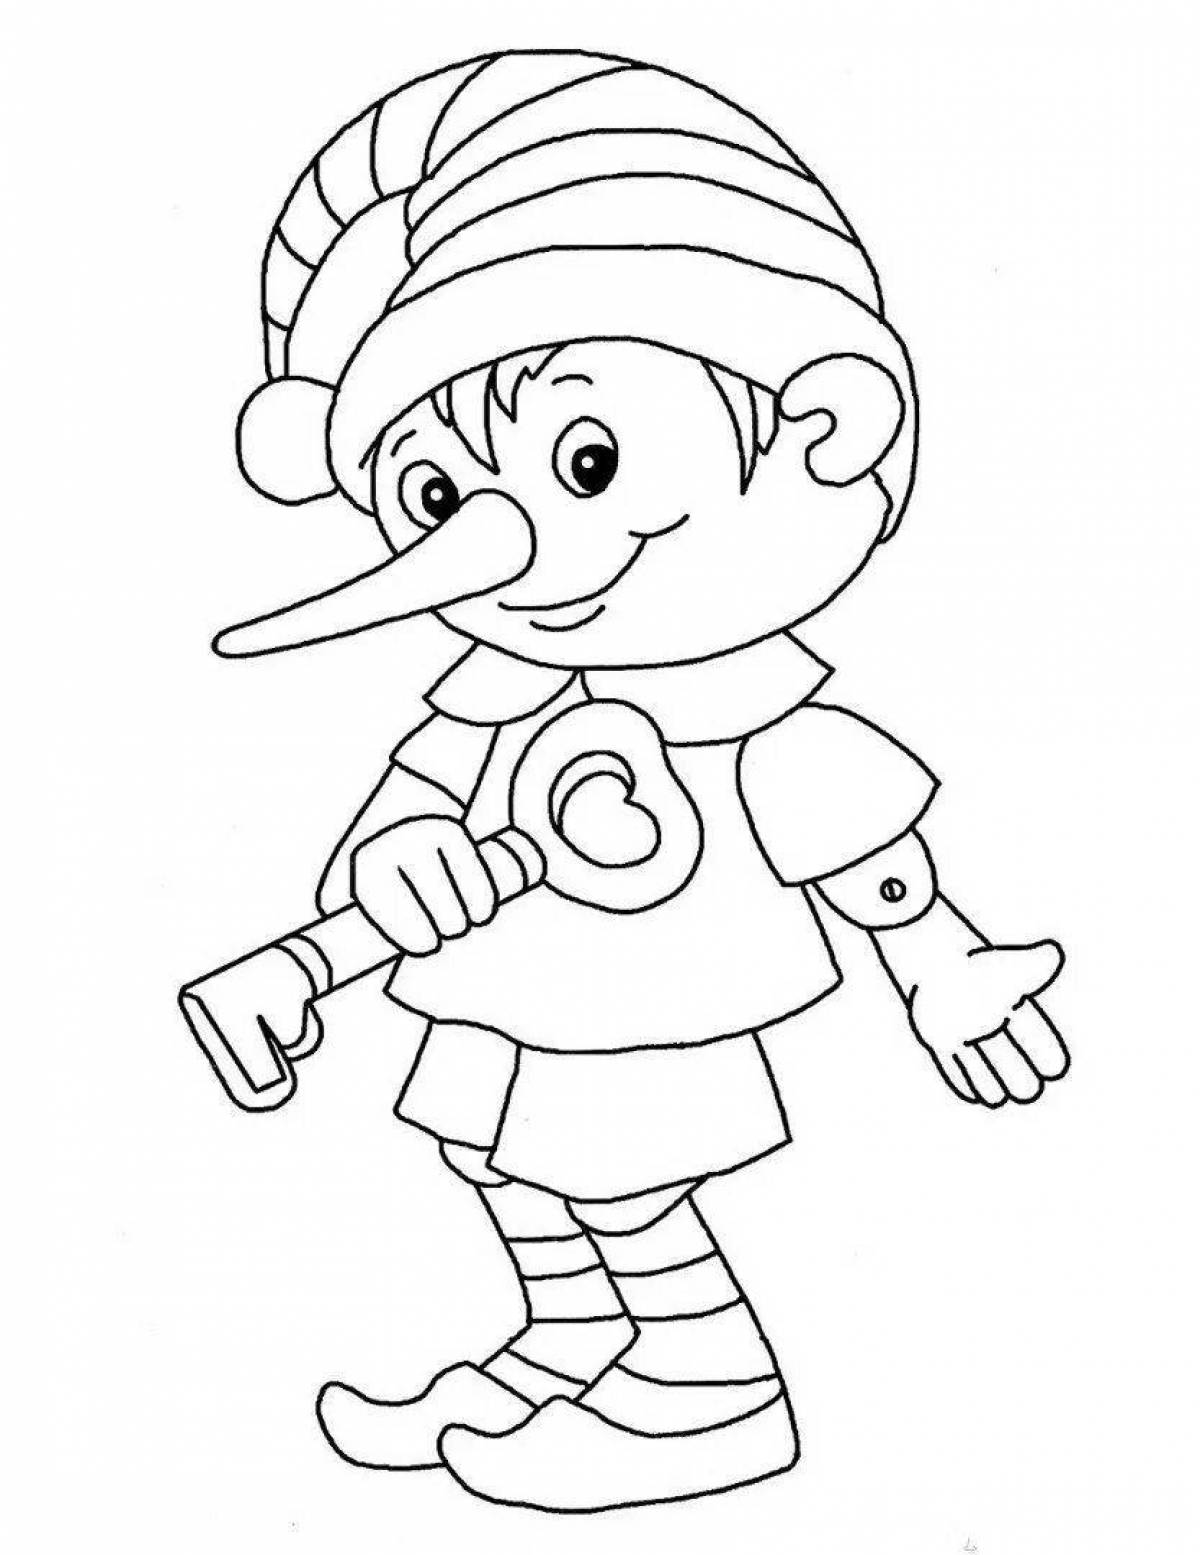 Pinocchio bright drawing